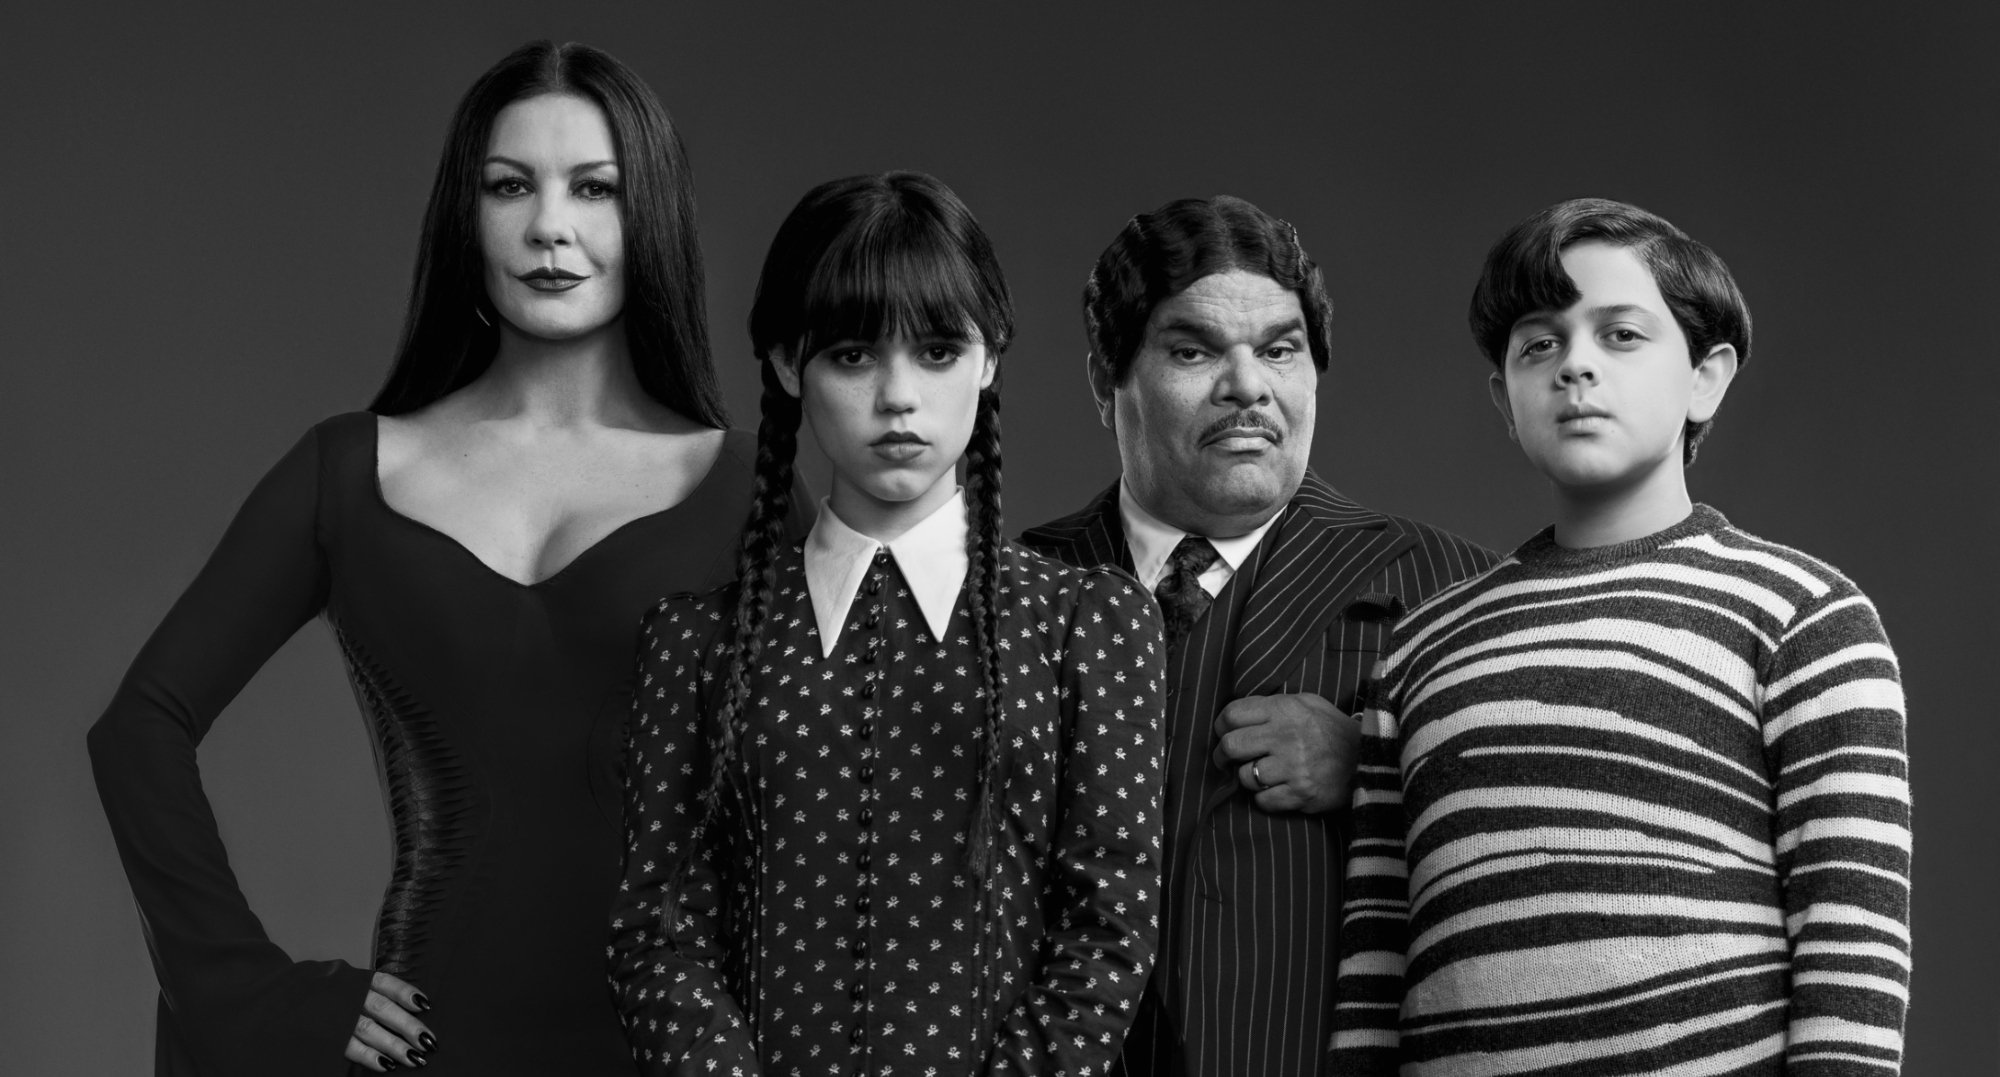 Jenna Ortega, Catherine Zeta-Jones, Luis Guzman and Isaac Ordonez for Netflix's 'Wednesday.'